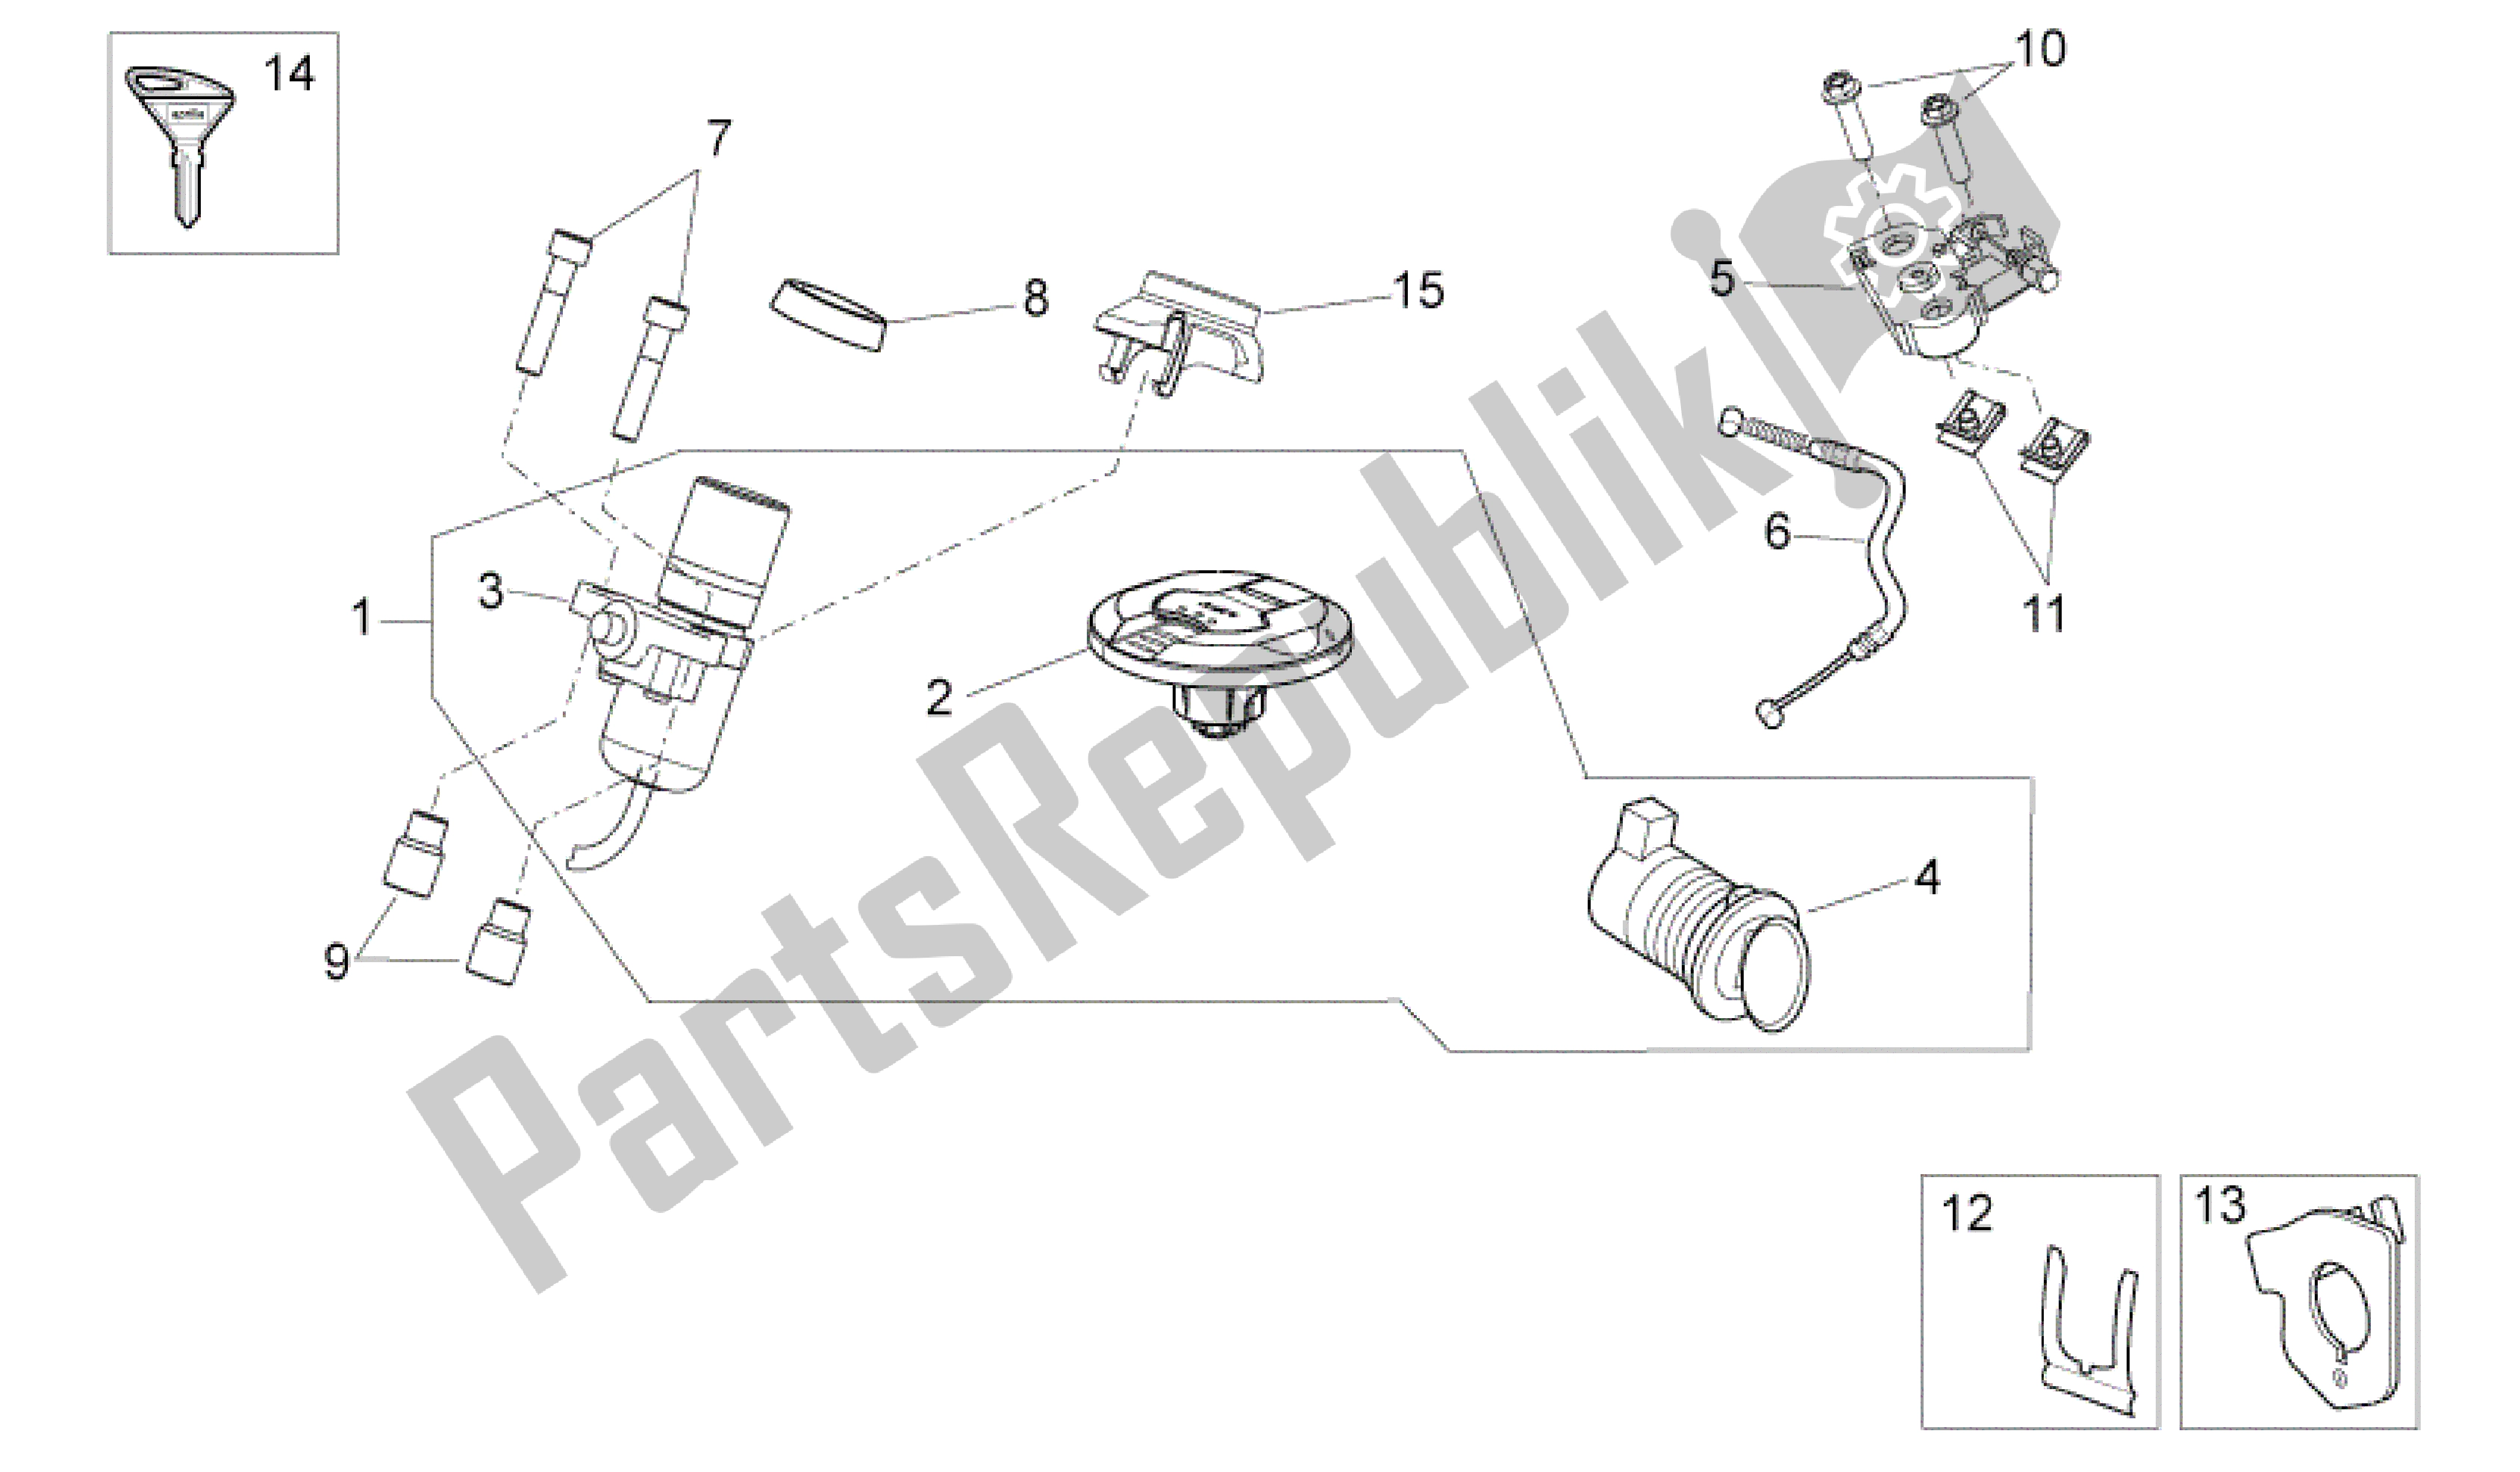 All parts for the Lock Hardware Kit of the Aprilia Dorsoduro 1200 2010 - 2013